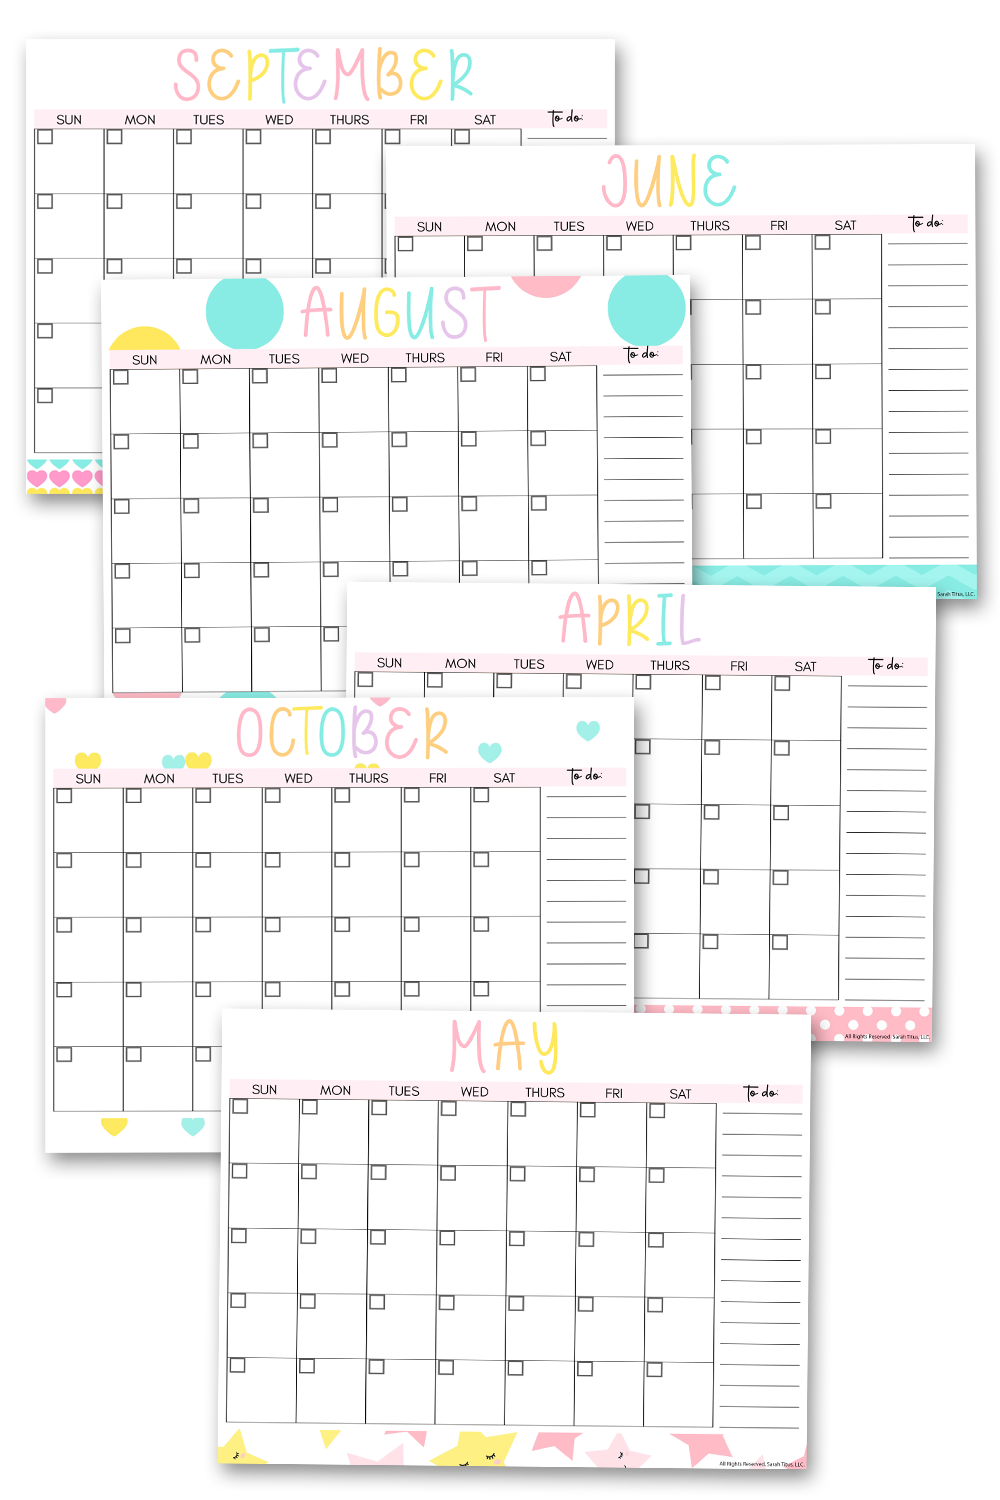 Undated Pastel Monthly Planner Calendars